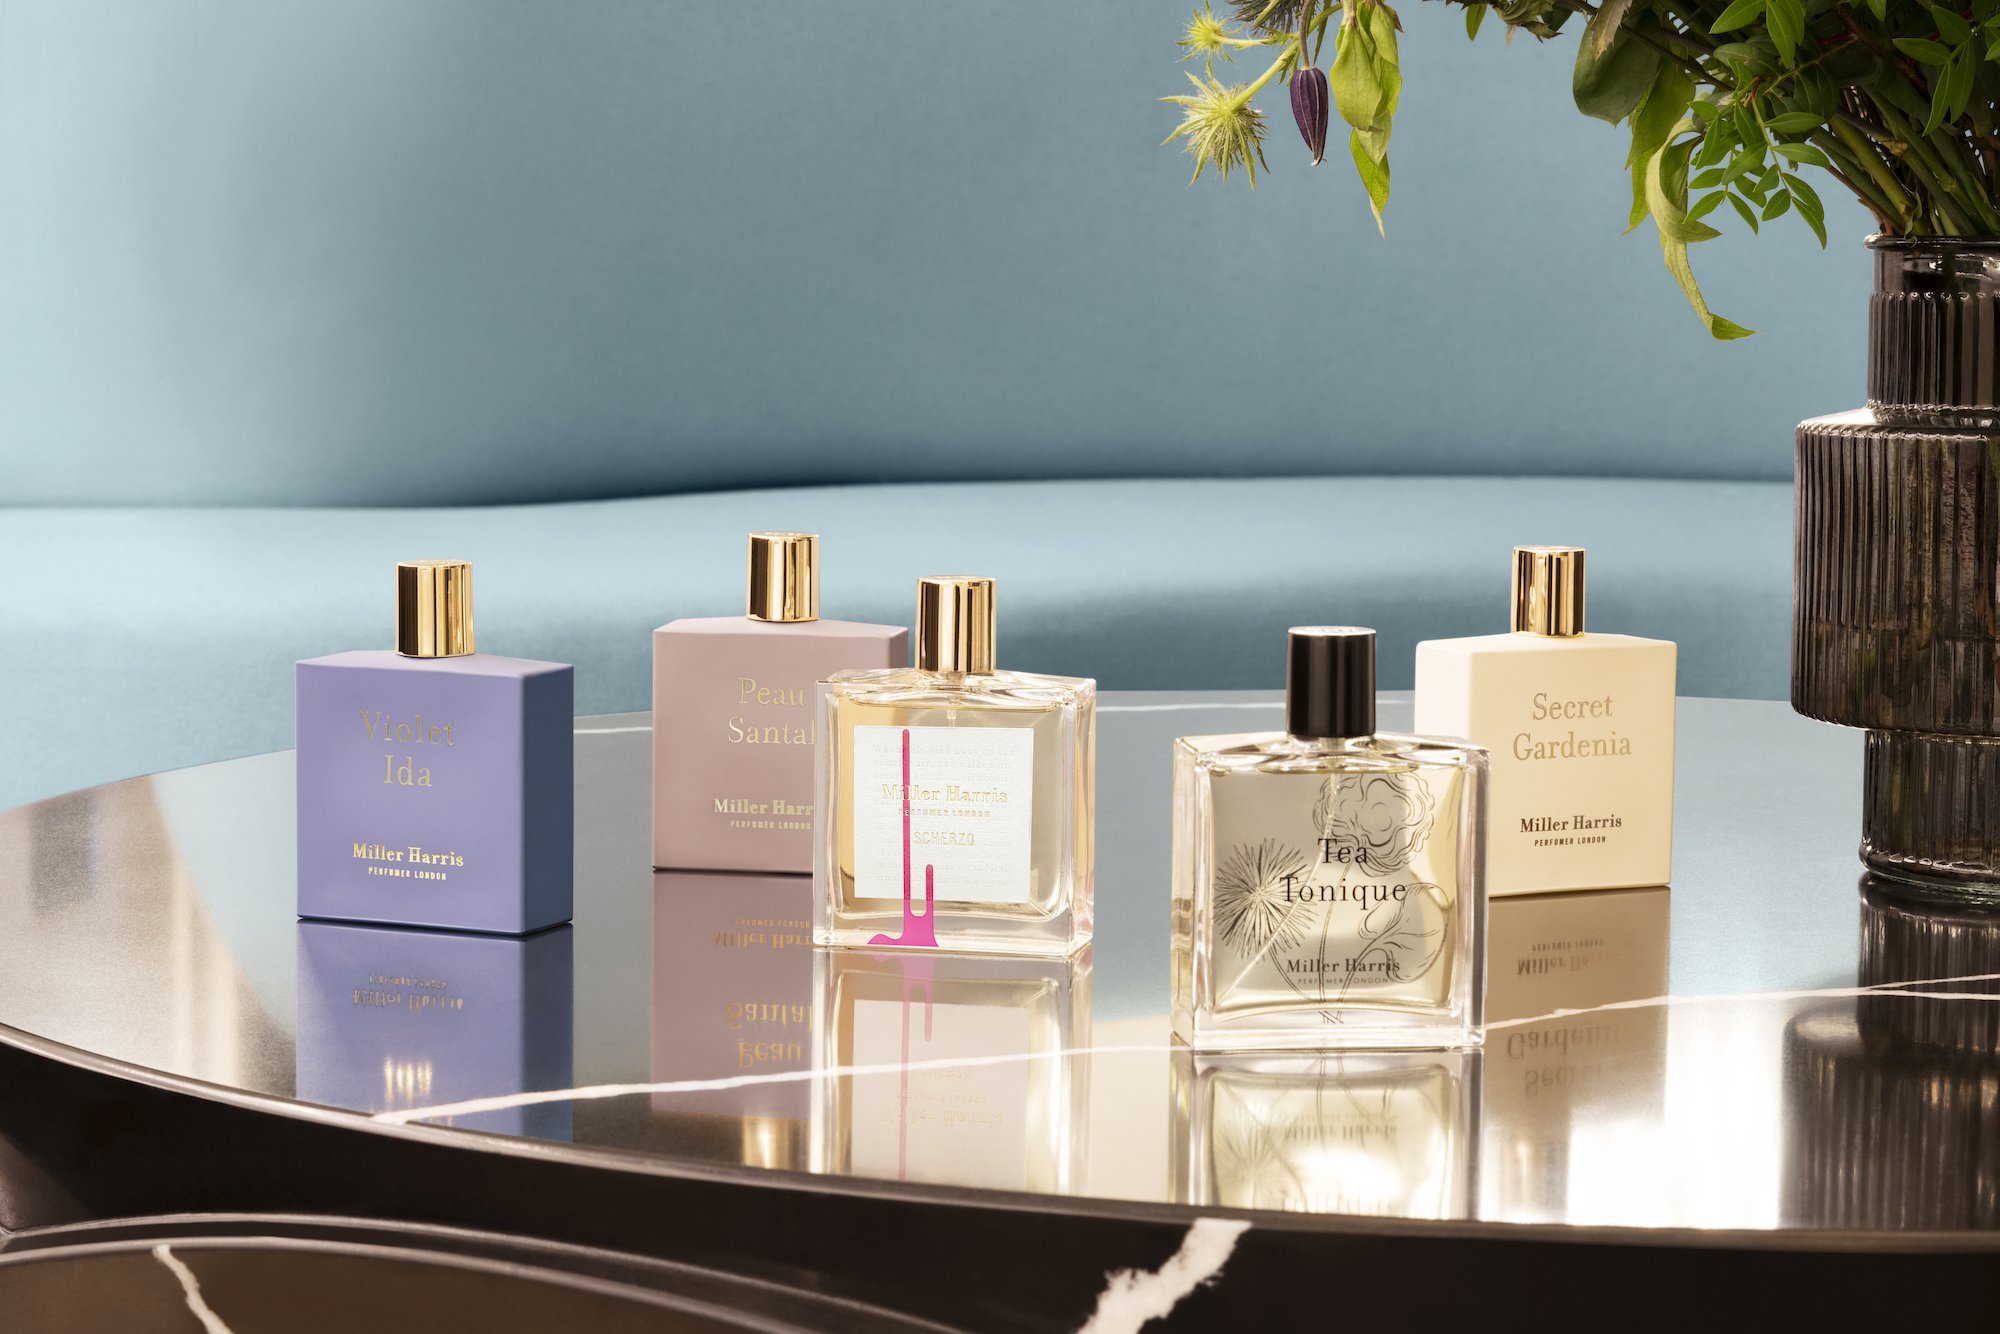 Miller Harris perfumes